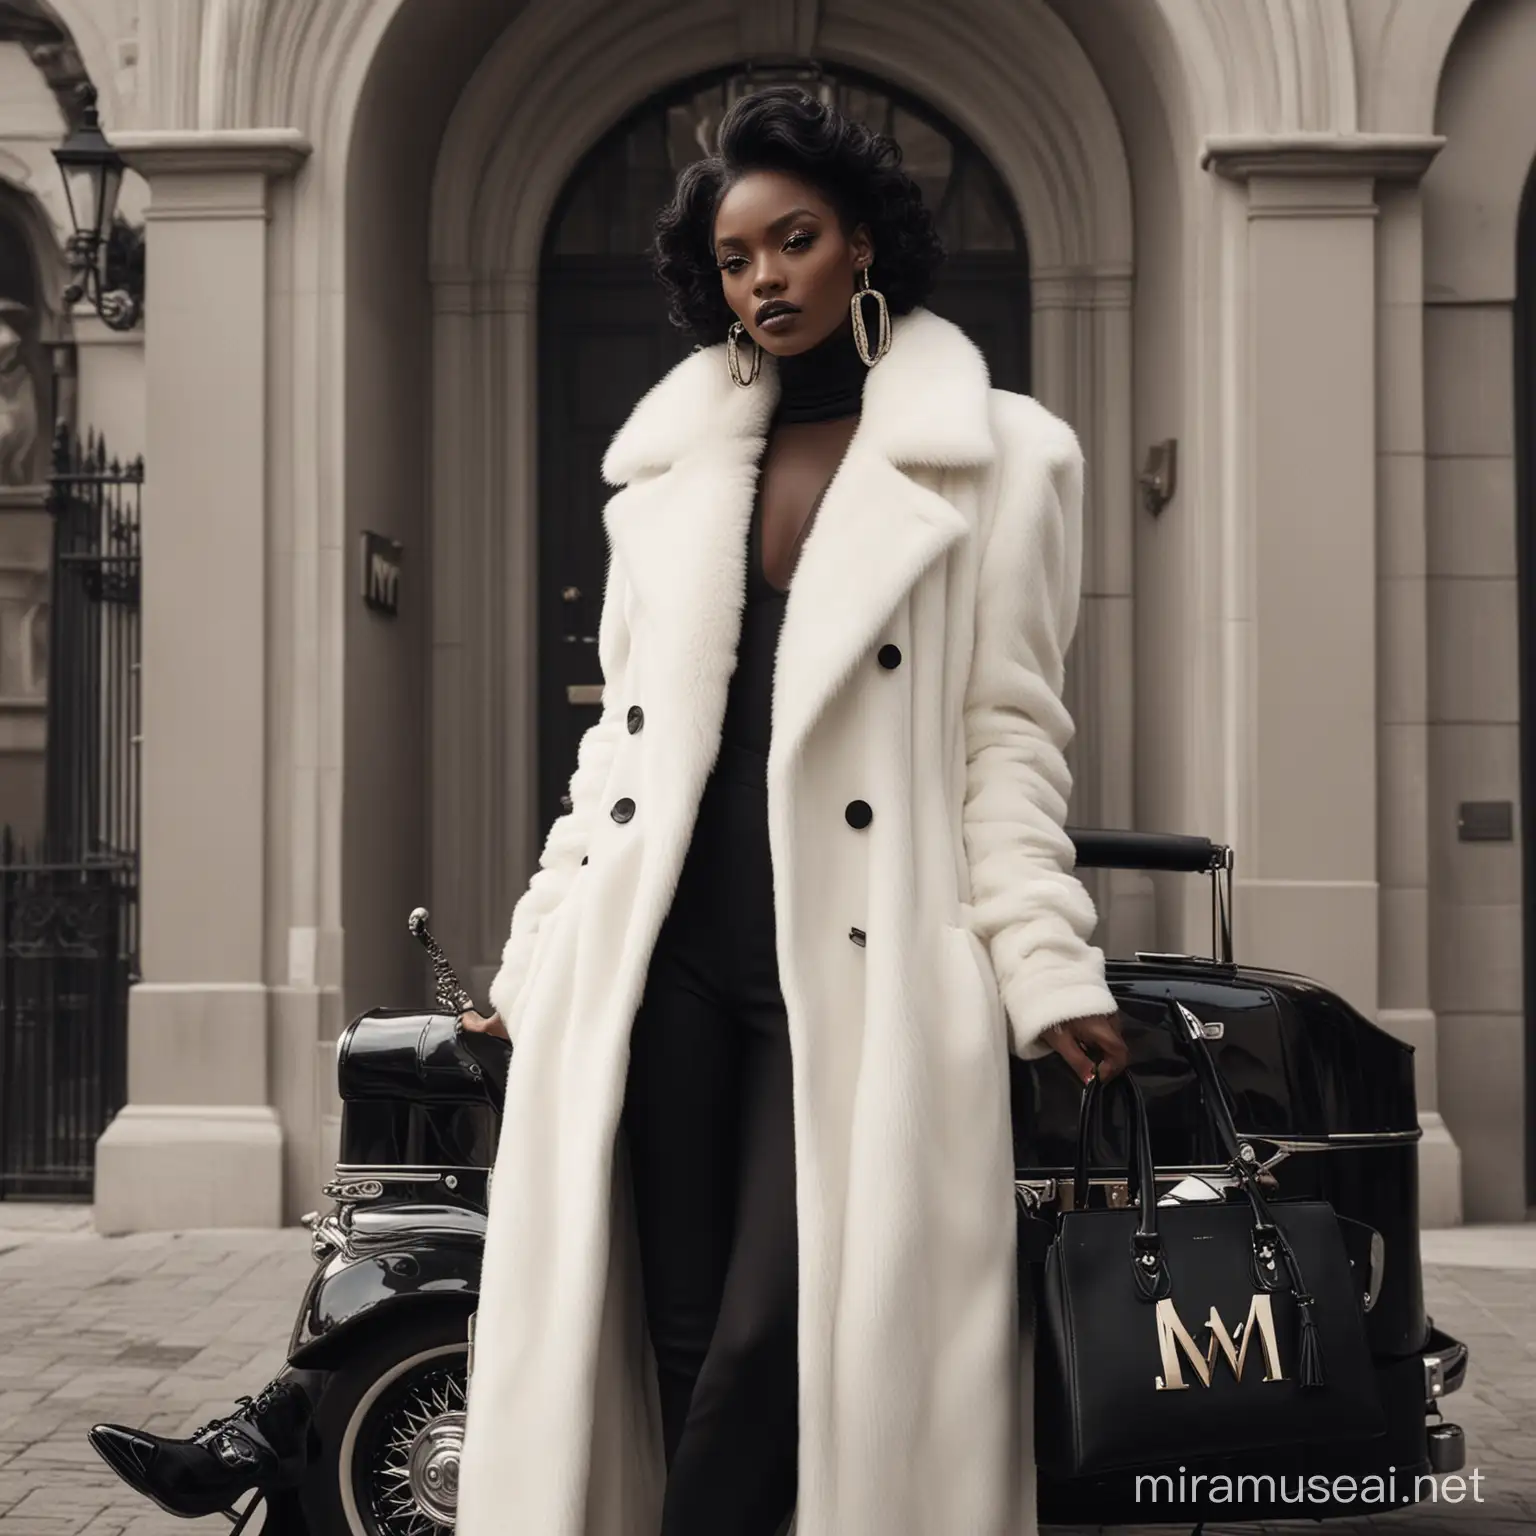 "M" branding, luxury fashion, black model  Luxury environment with cruella style